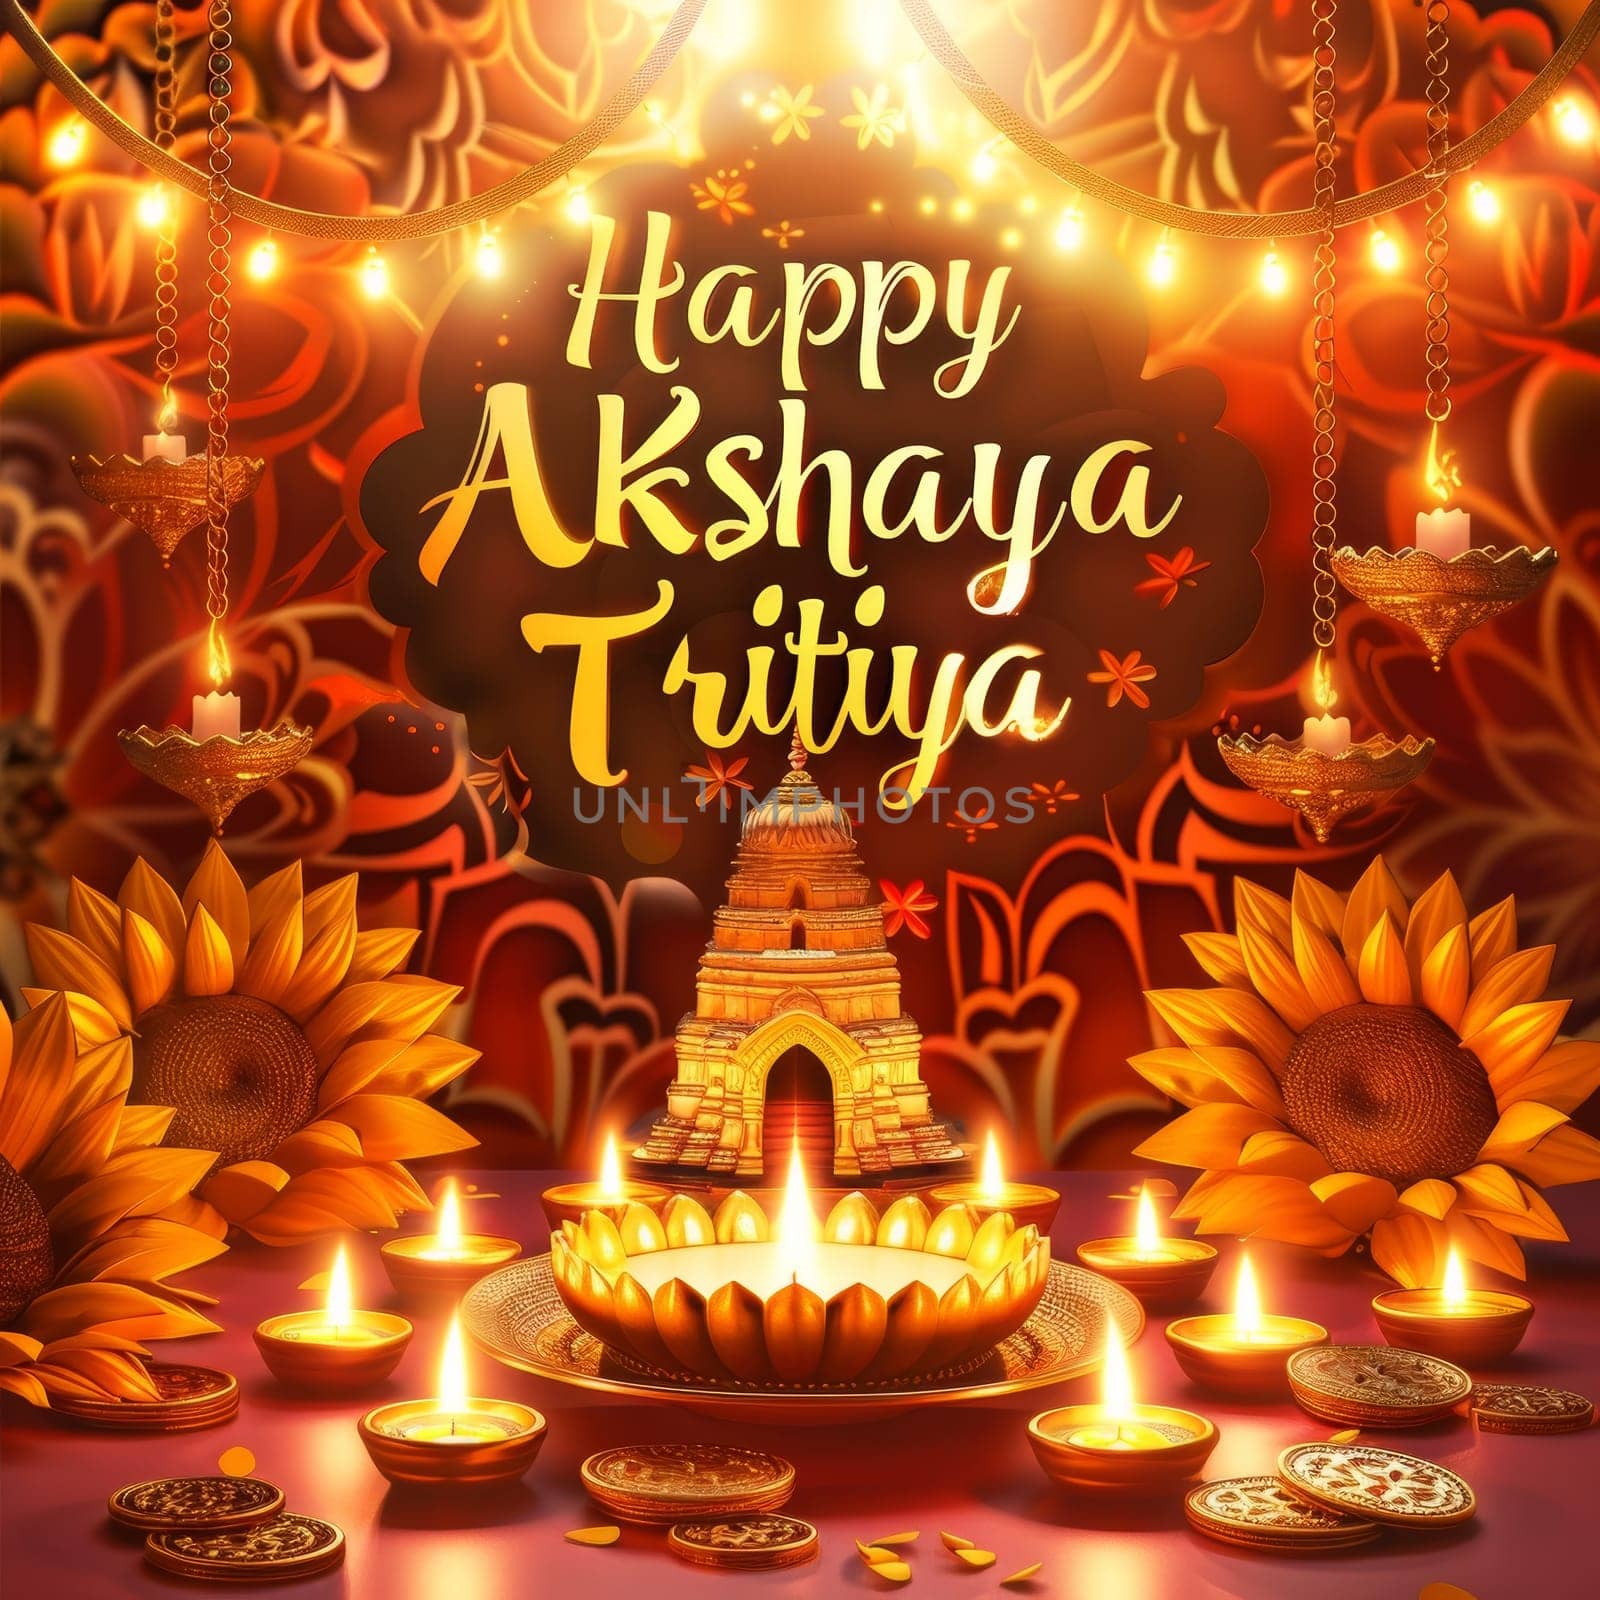 A celebratory illustration for Akshaya Tritiya, displaying a gold palace, lanterns, and sunflowers on a vibrant backdrop by sfinks